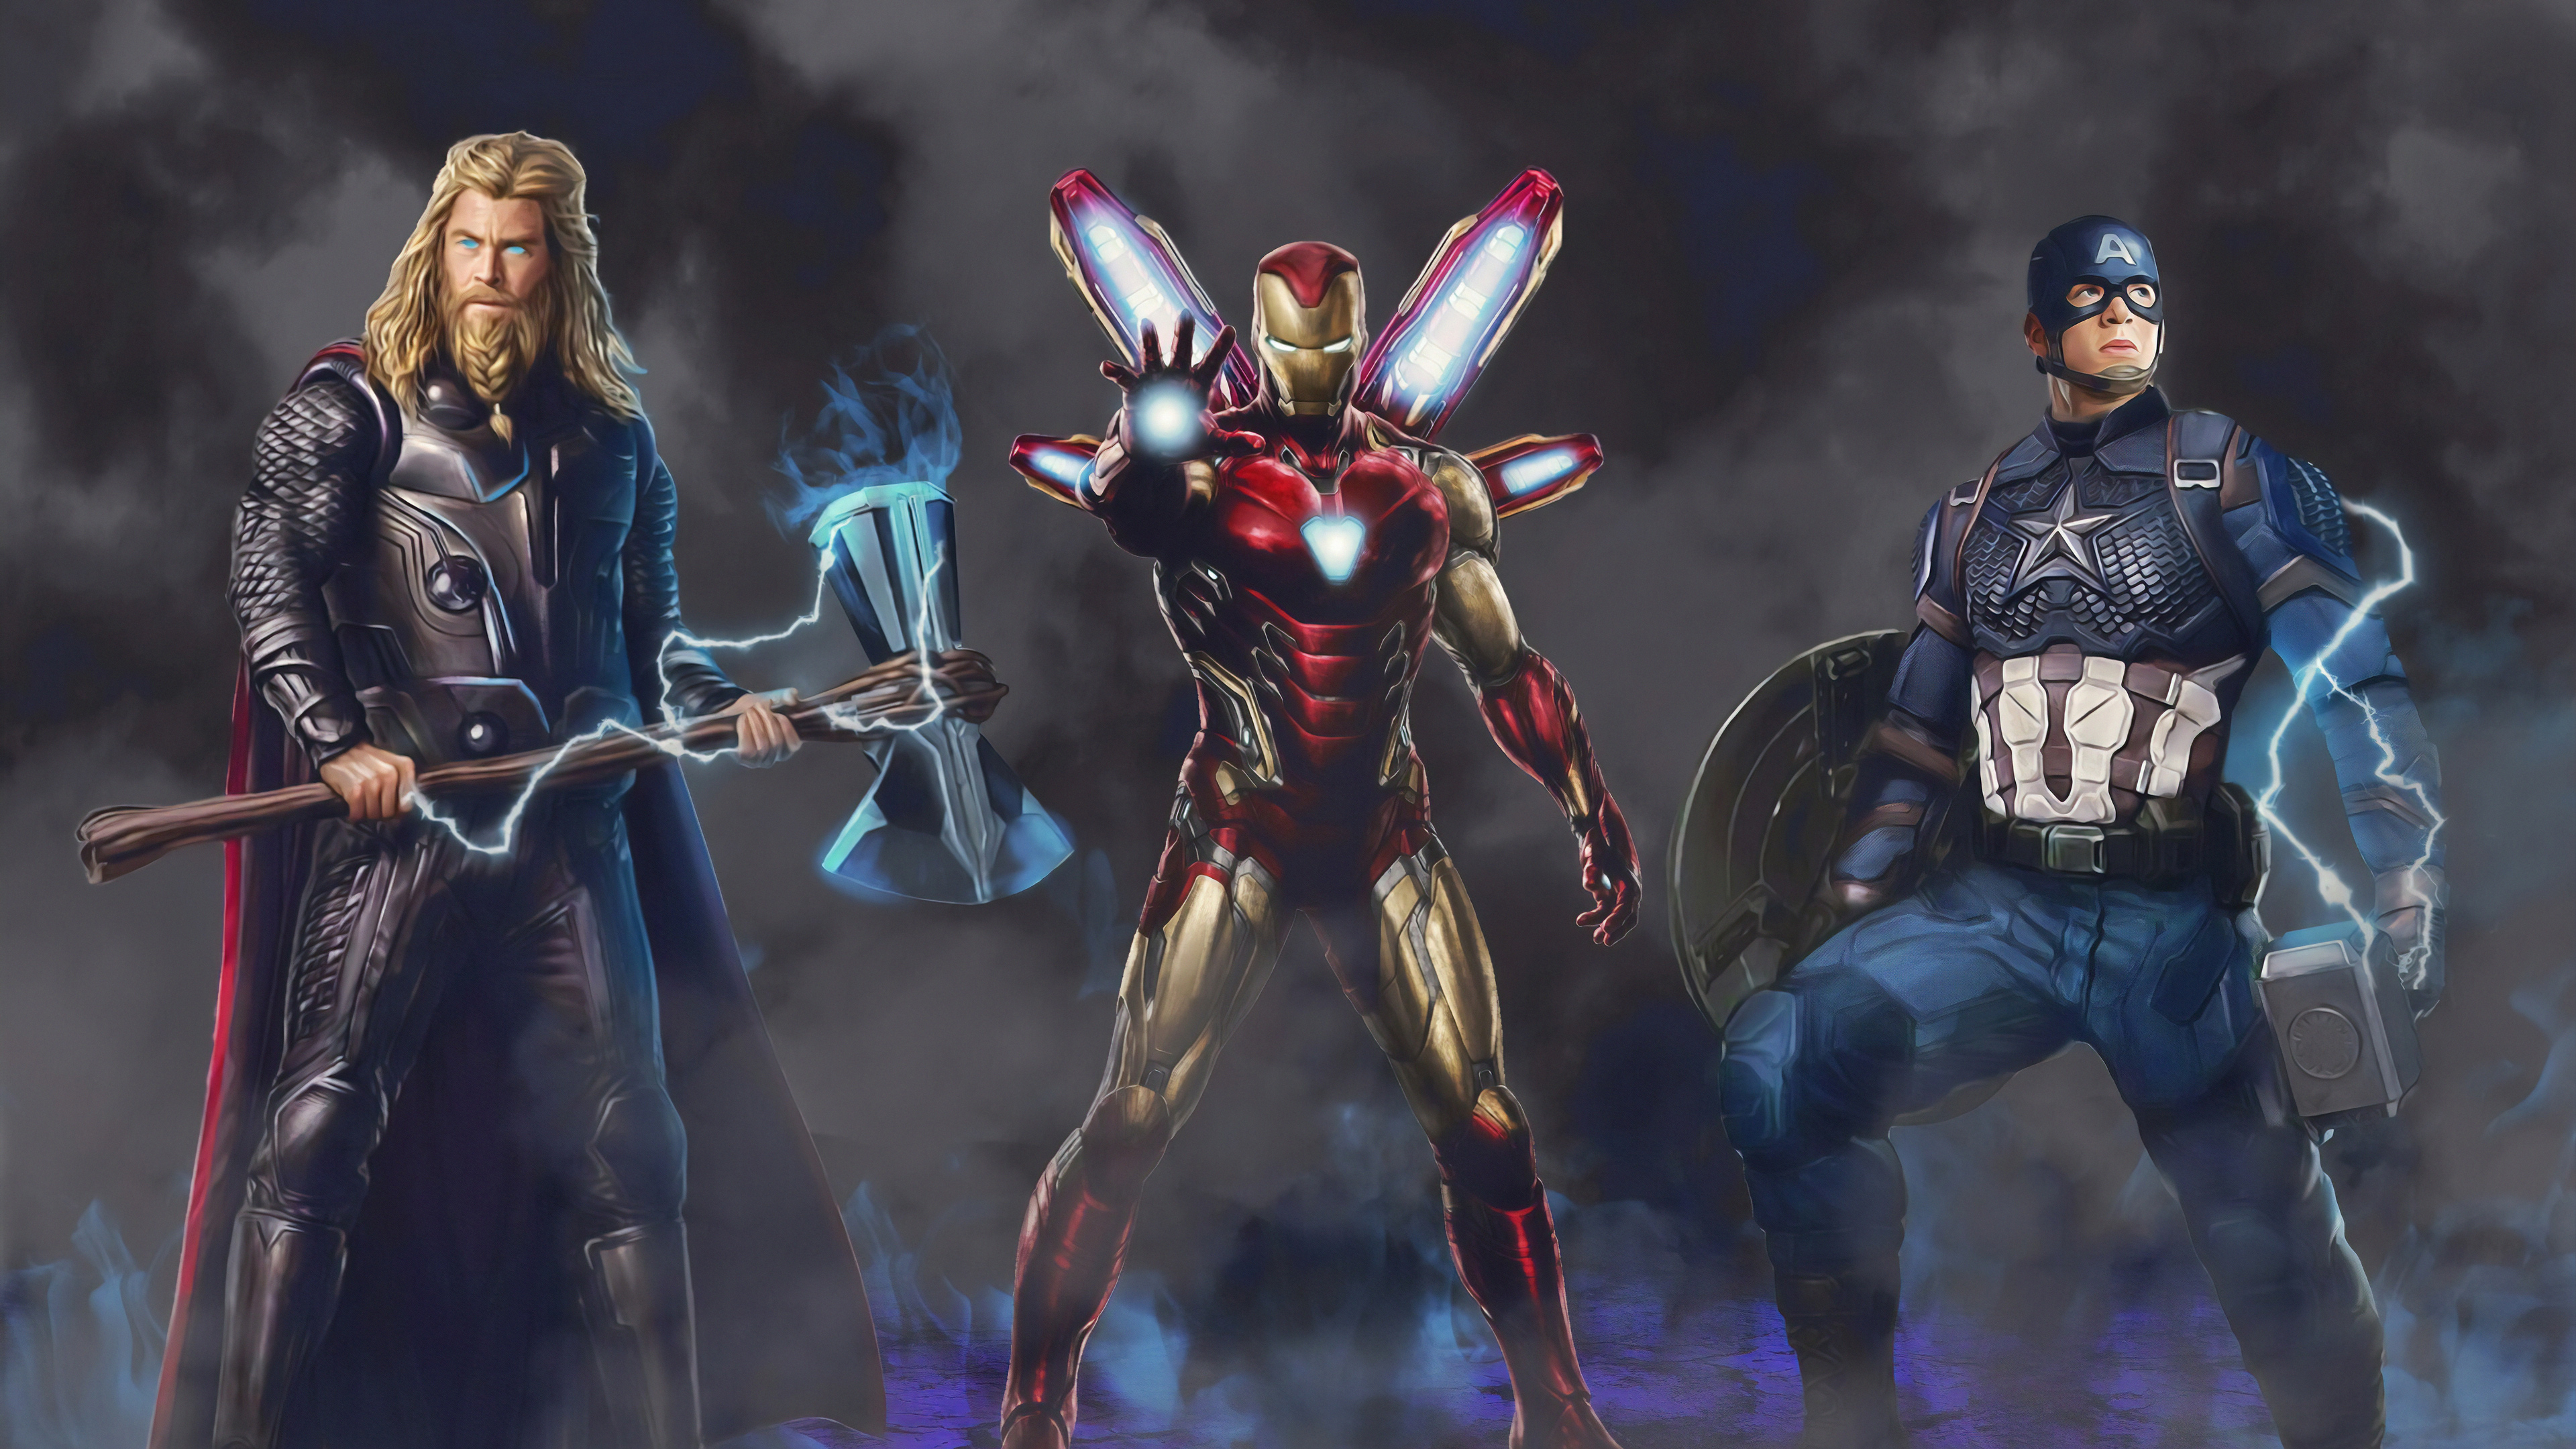 3840X2160 4K wallpaper: Ultra Hd Iron Man Thor Captain America Wallpaper. 